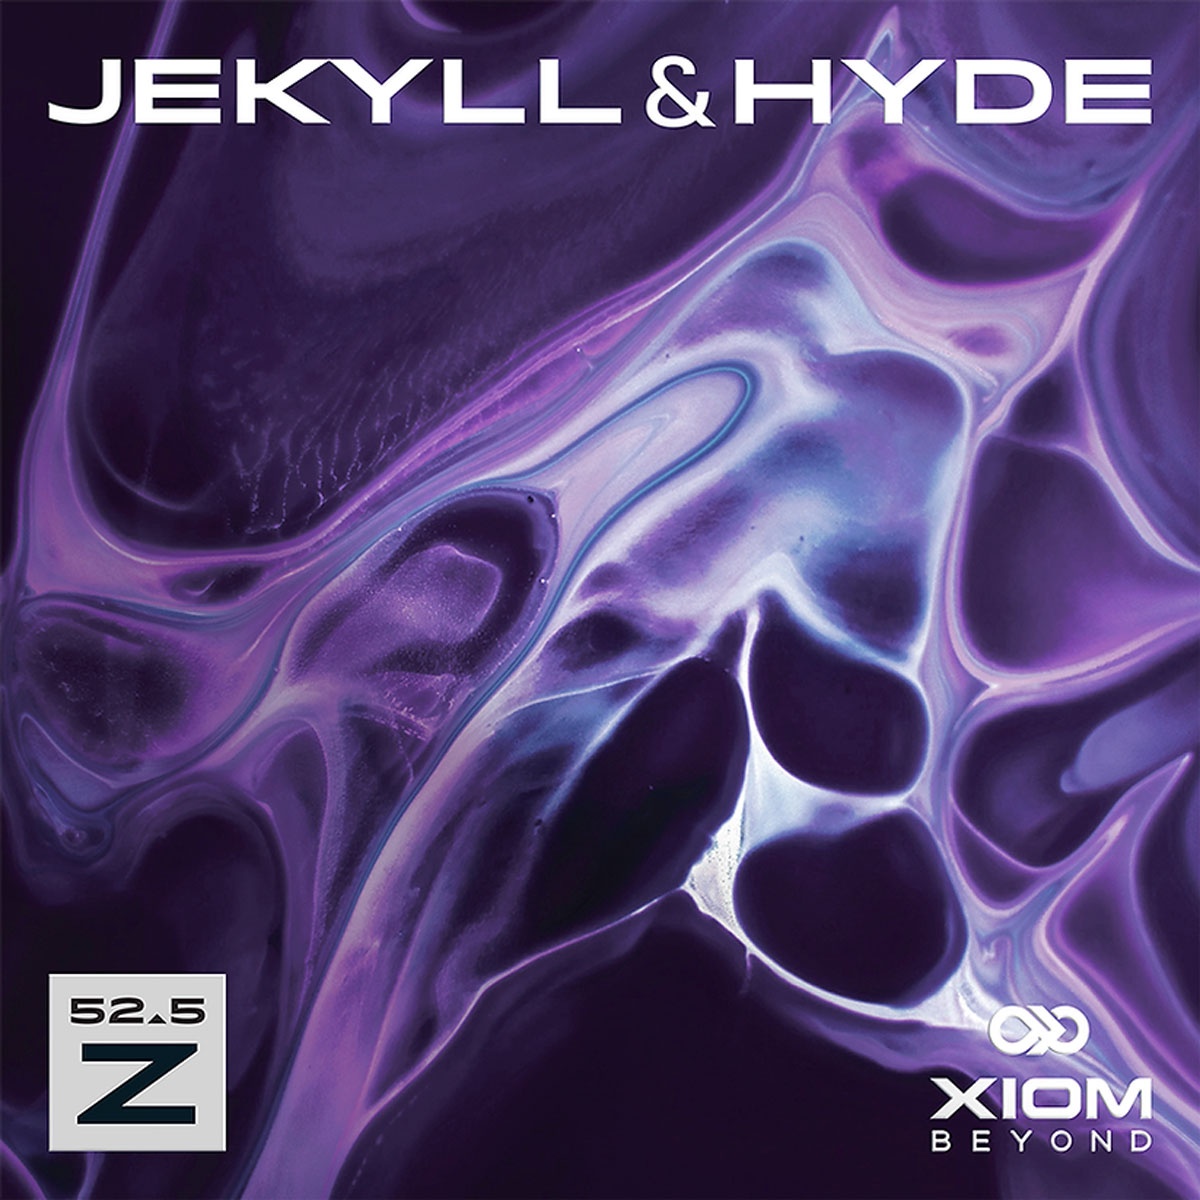 Xiom Rubber Jekyll & Hyde Z52,5 black 2,1 mm